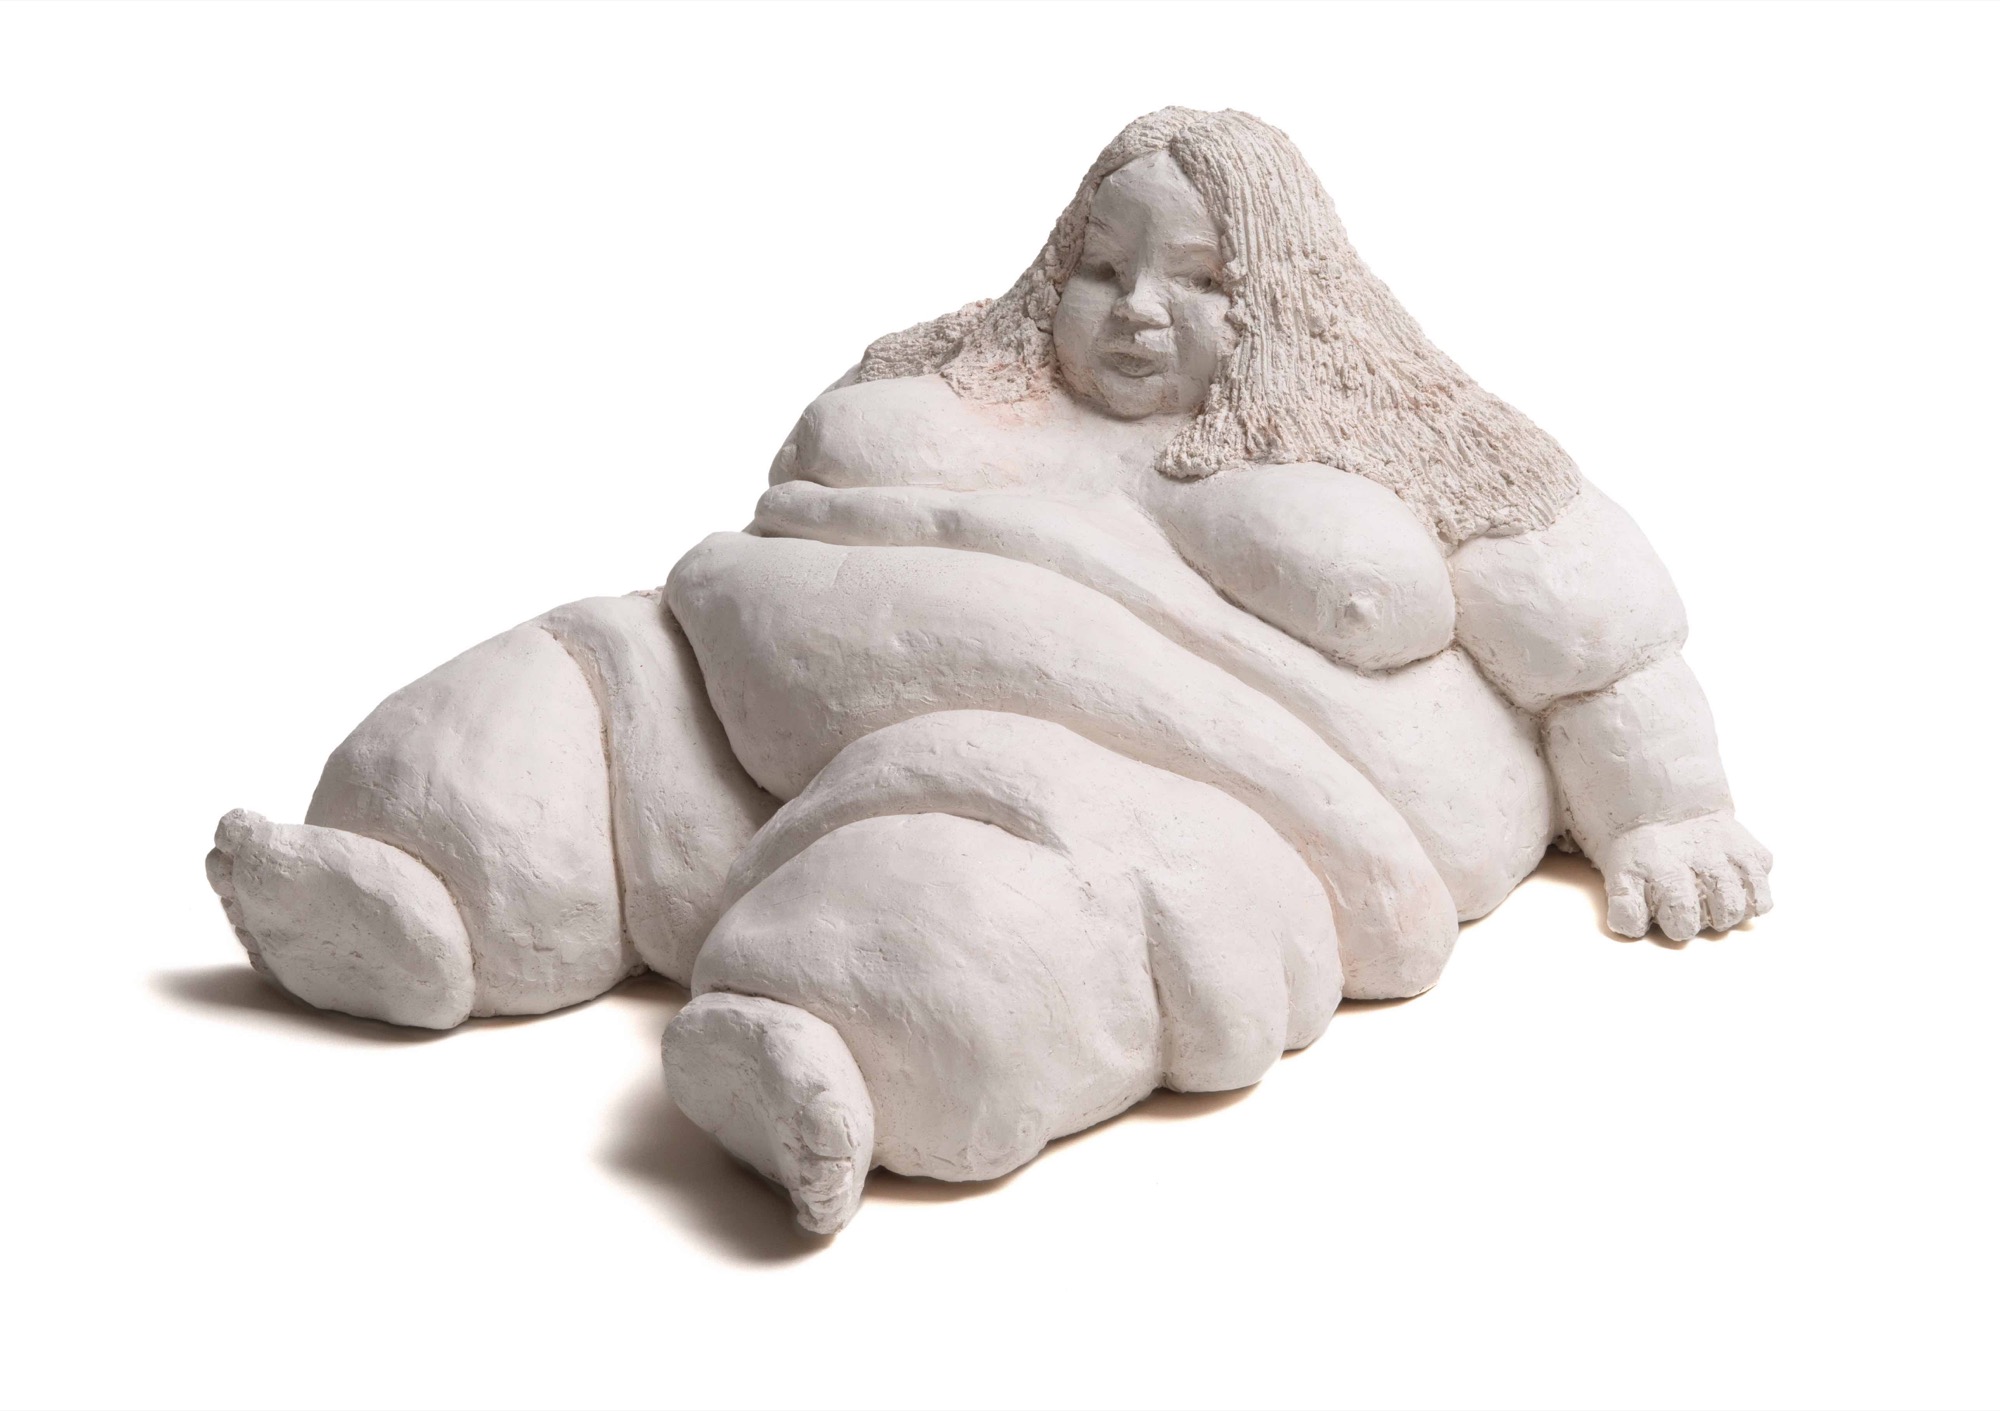 Chris Mason, Reclining Nude, 2015, ceramic, 19.5 x 35.5 x 42 cm. Courtesy Arts Project Australia.